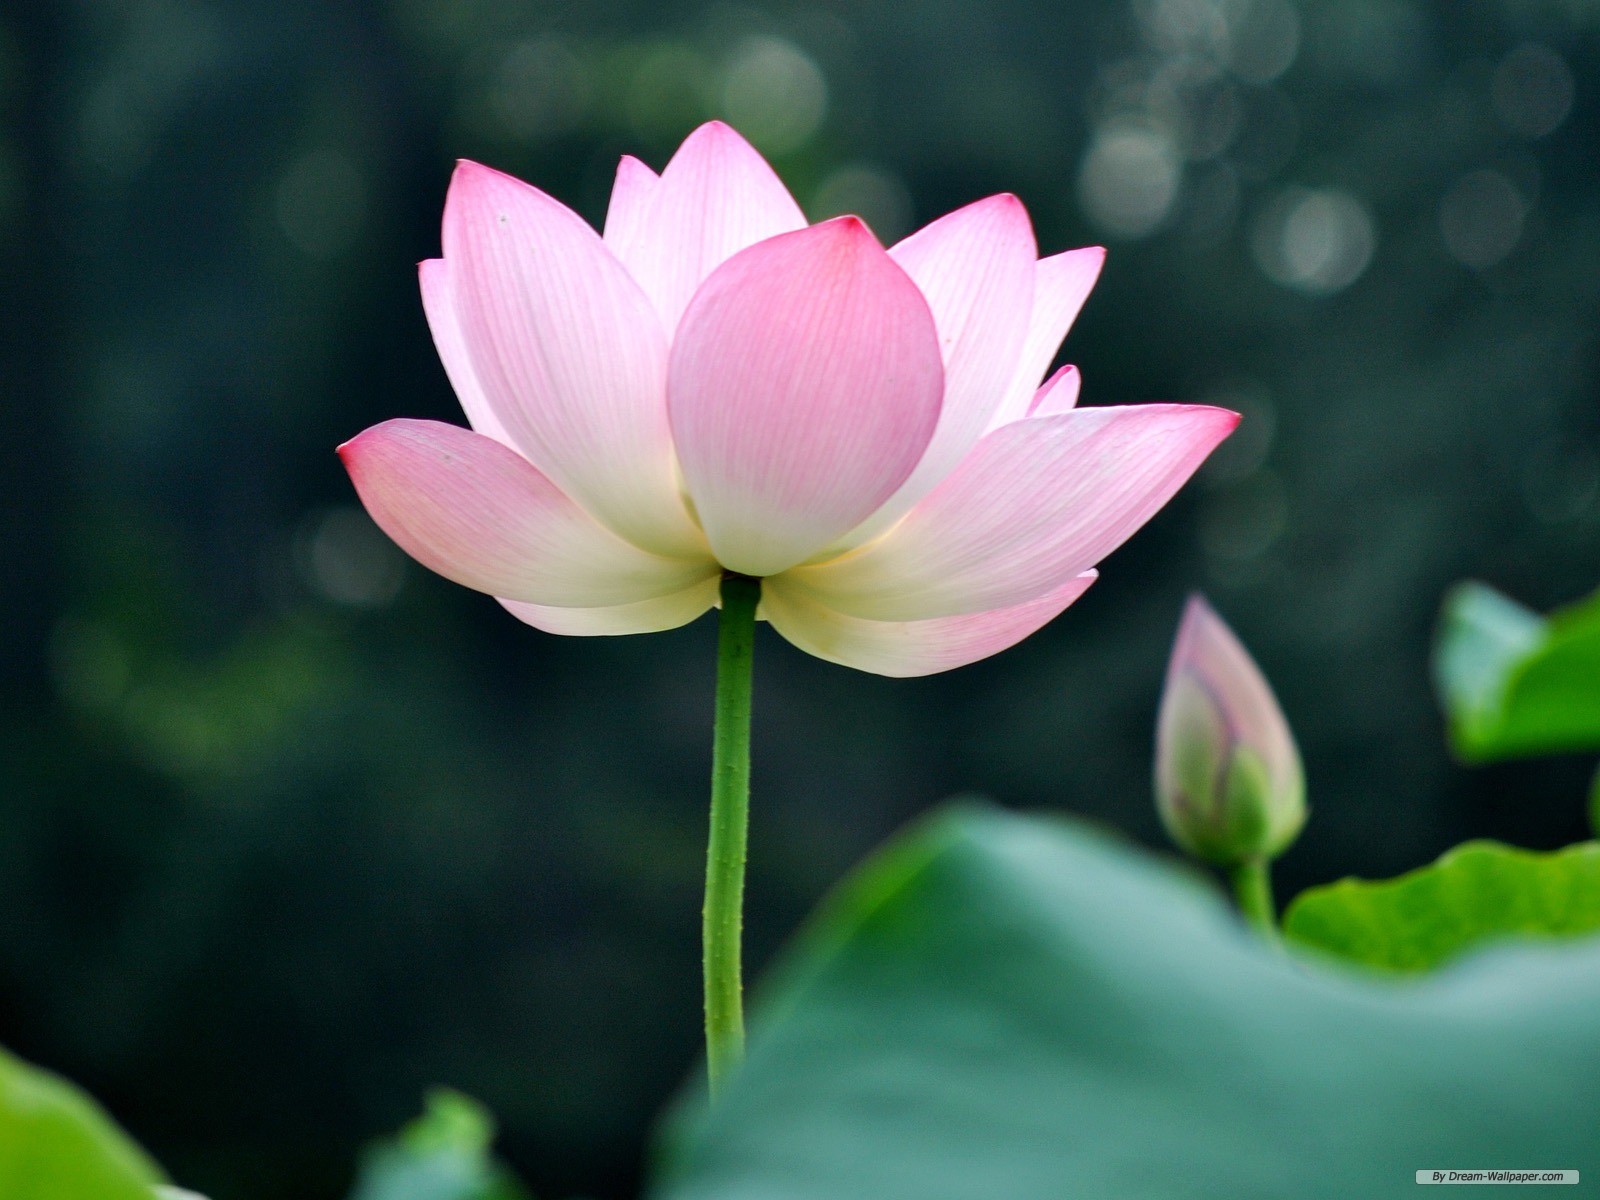 And Browse Lotus Flower Desktop Wallpaper Image For